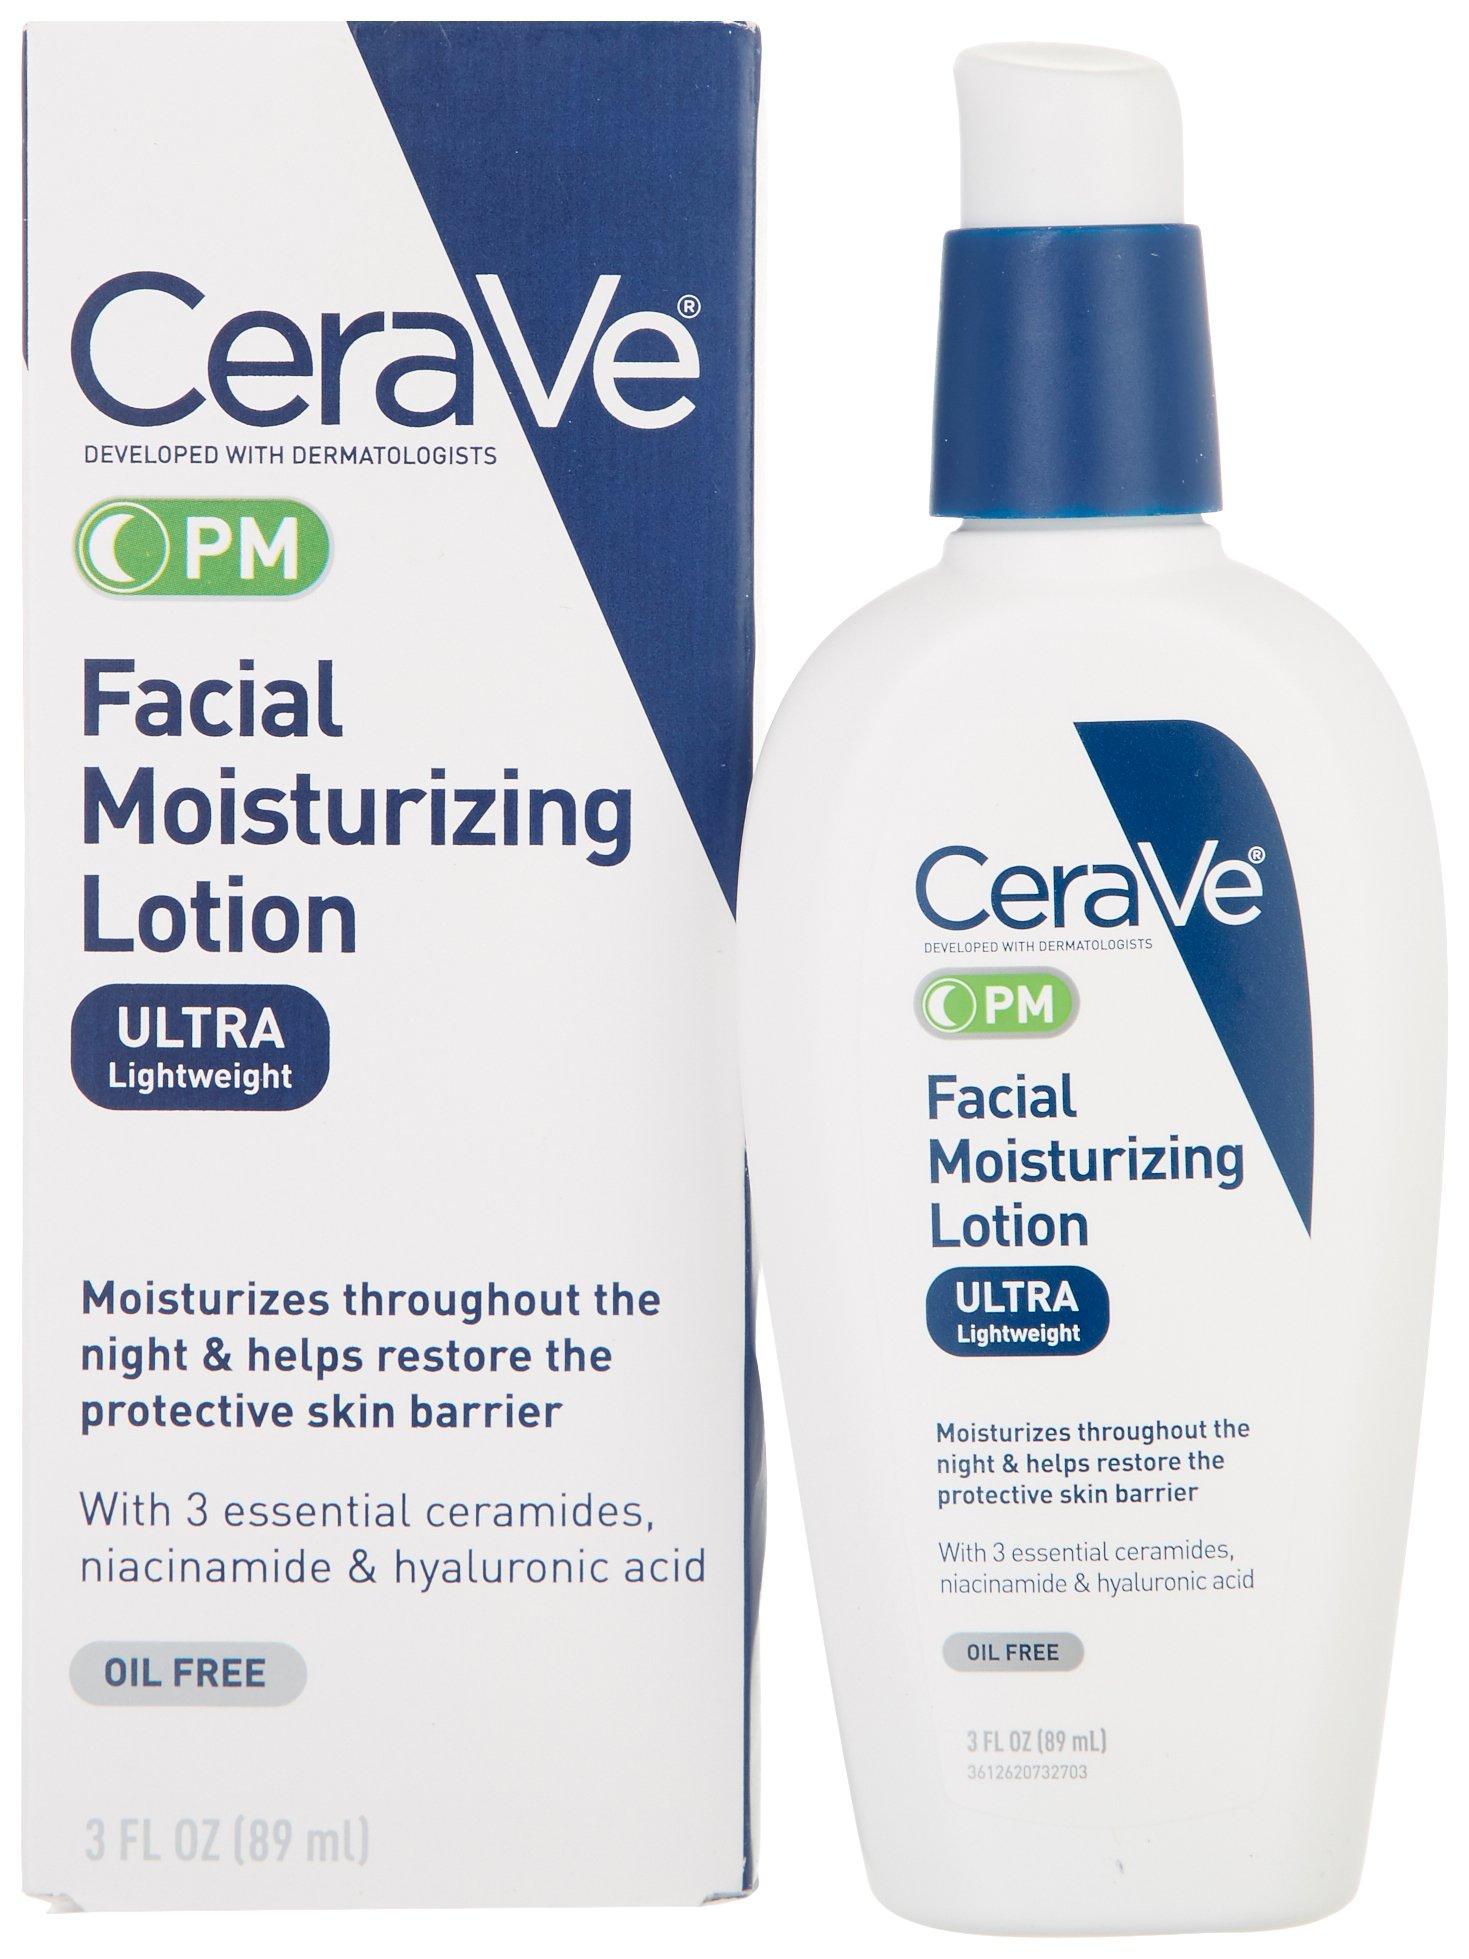 Cerave PM Facial Moisturizing Lotion